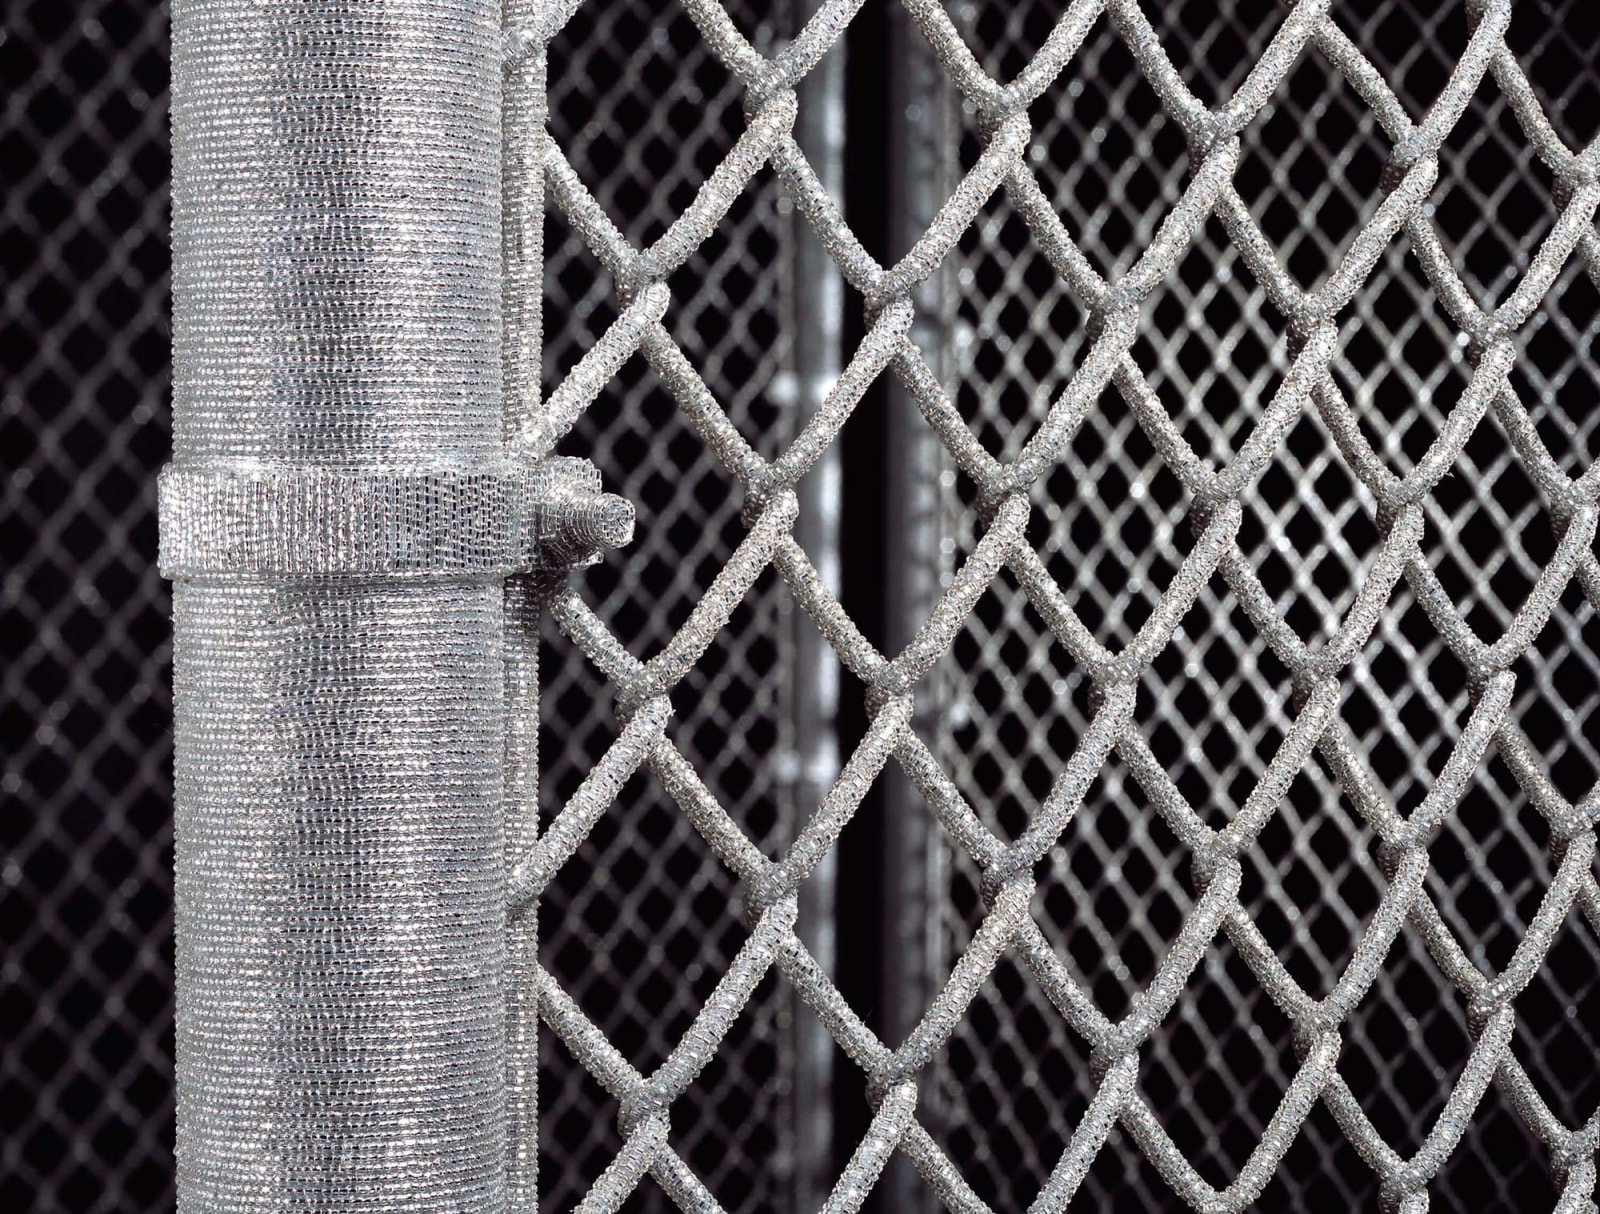 LIZA LOU, Security Fence, 2005